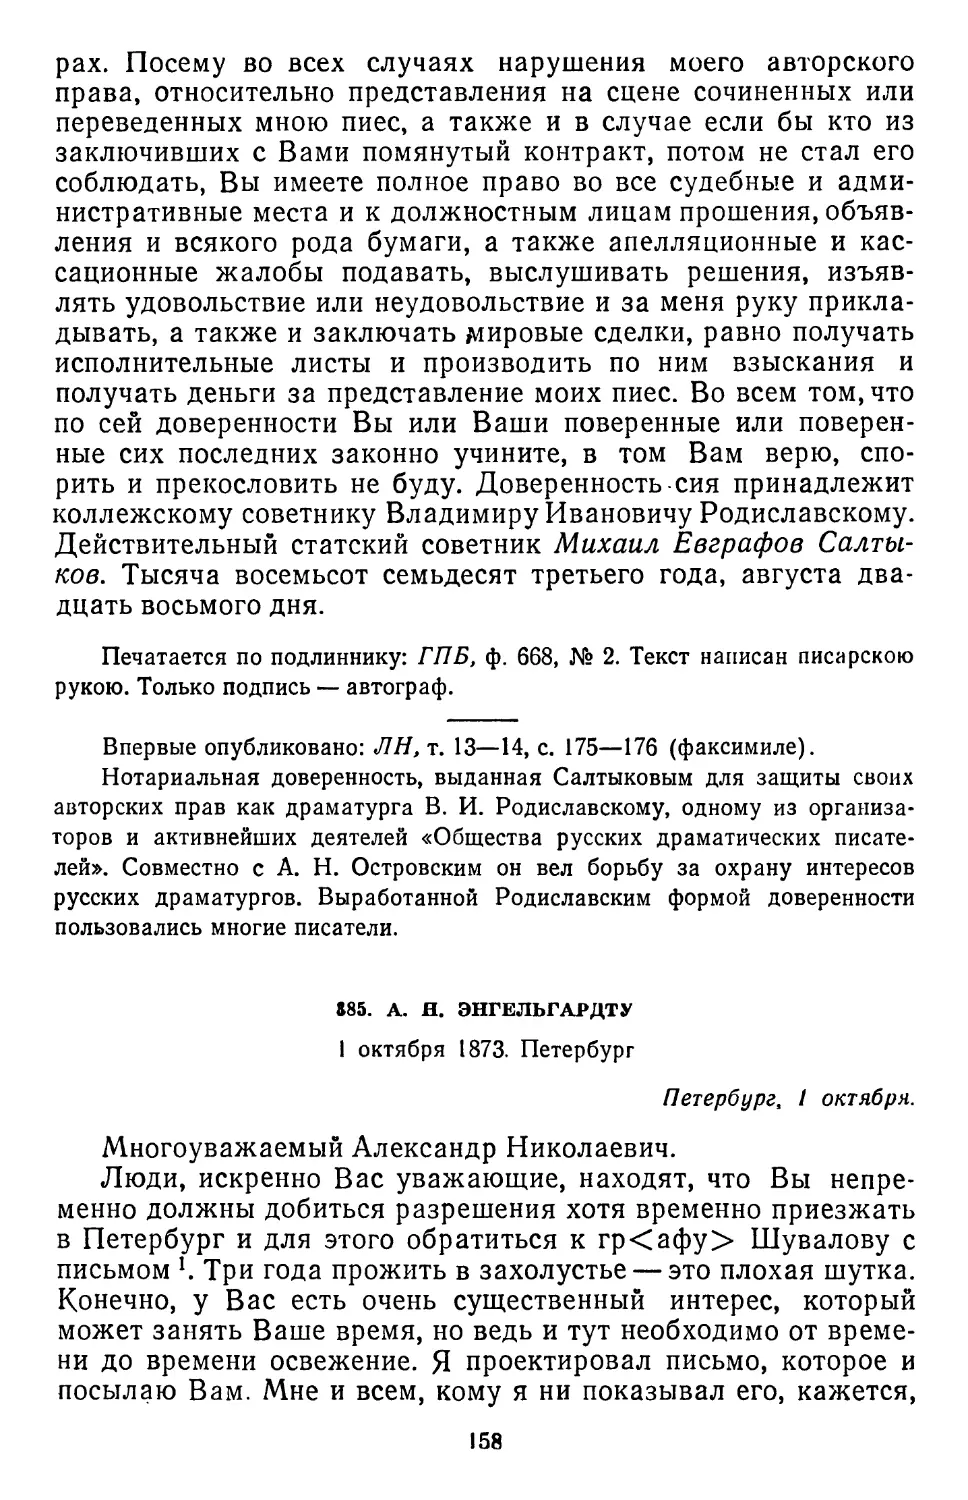 385.А.Н.Энгельгардту. 1 октября1873.Петербург..